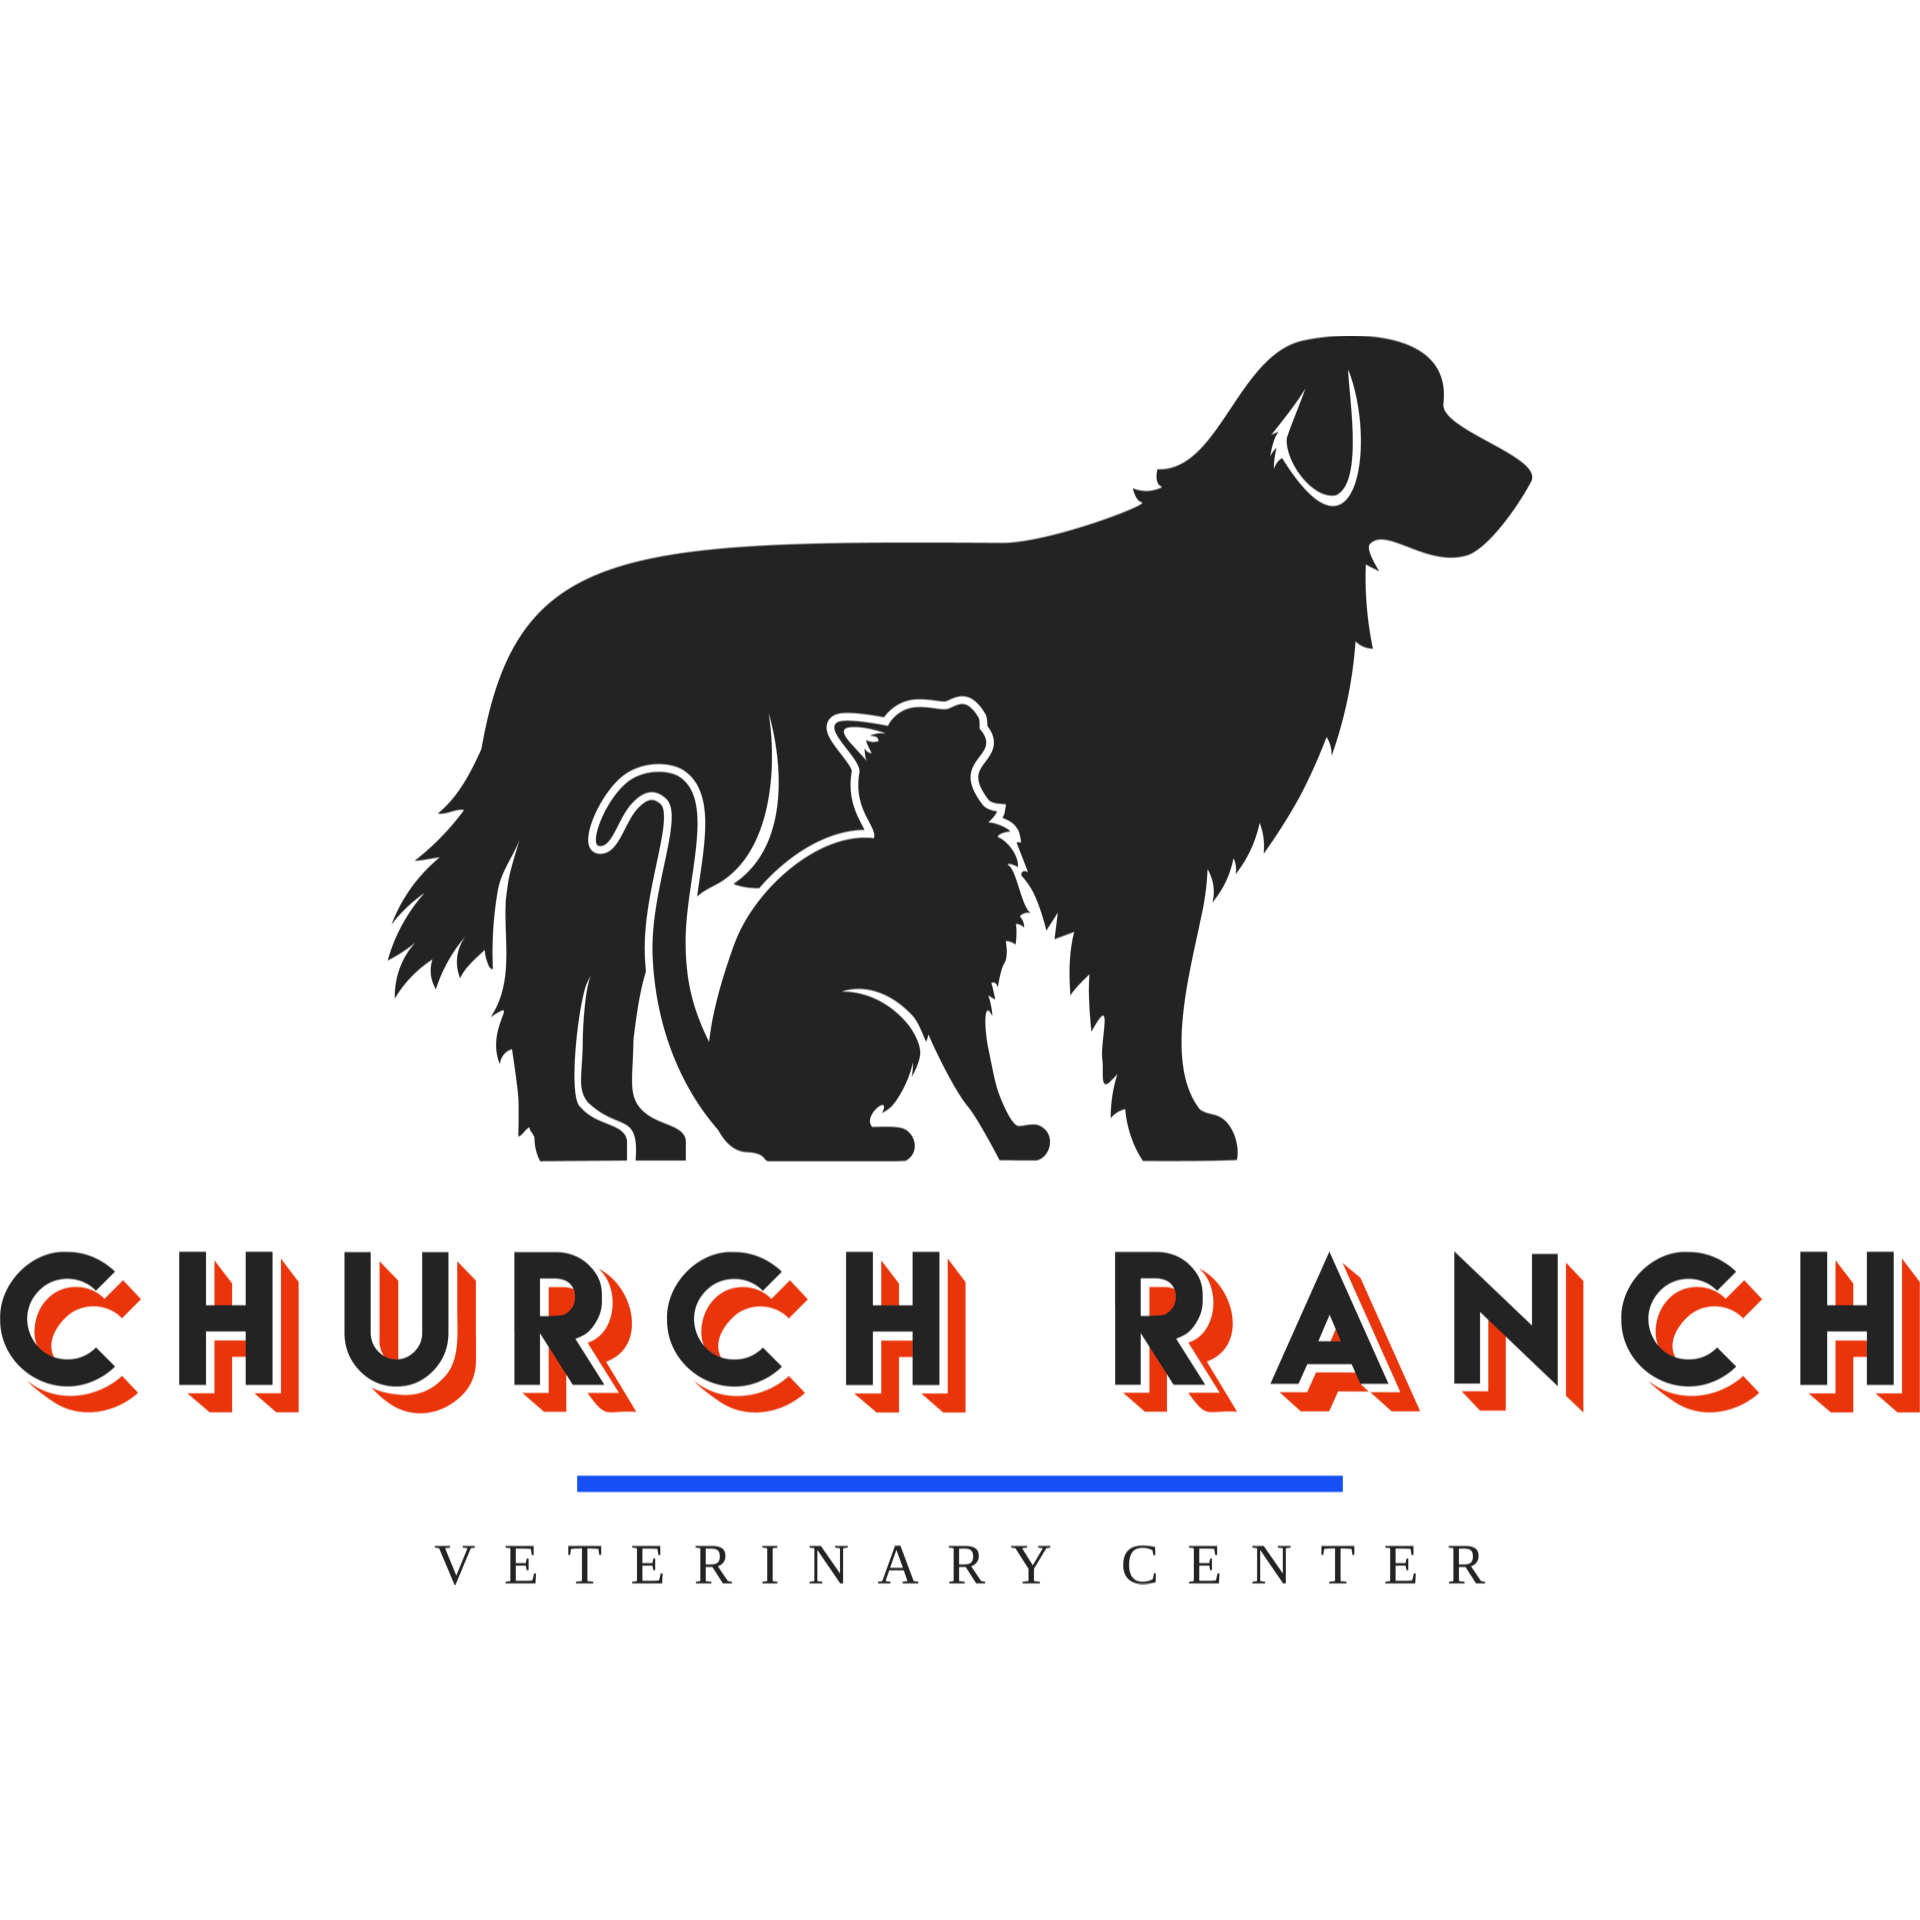 Church Ranch Veterinary Center